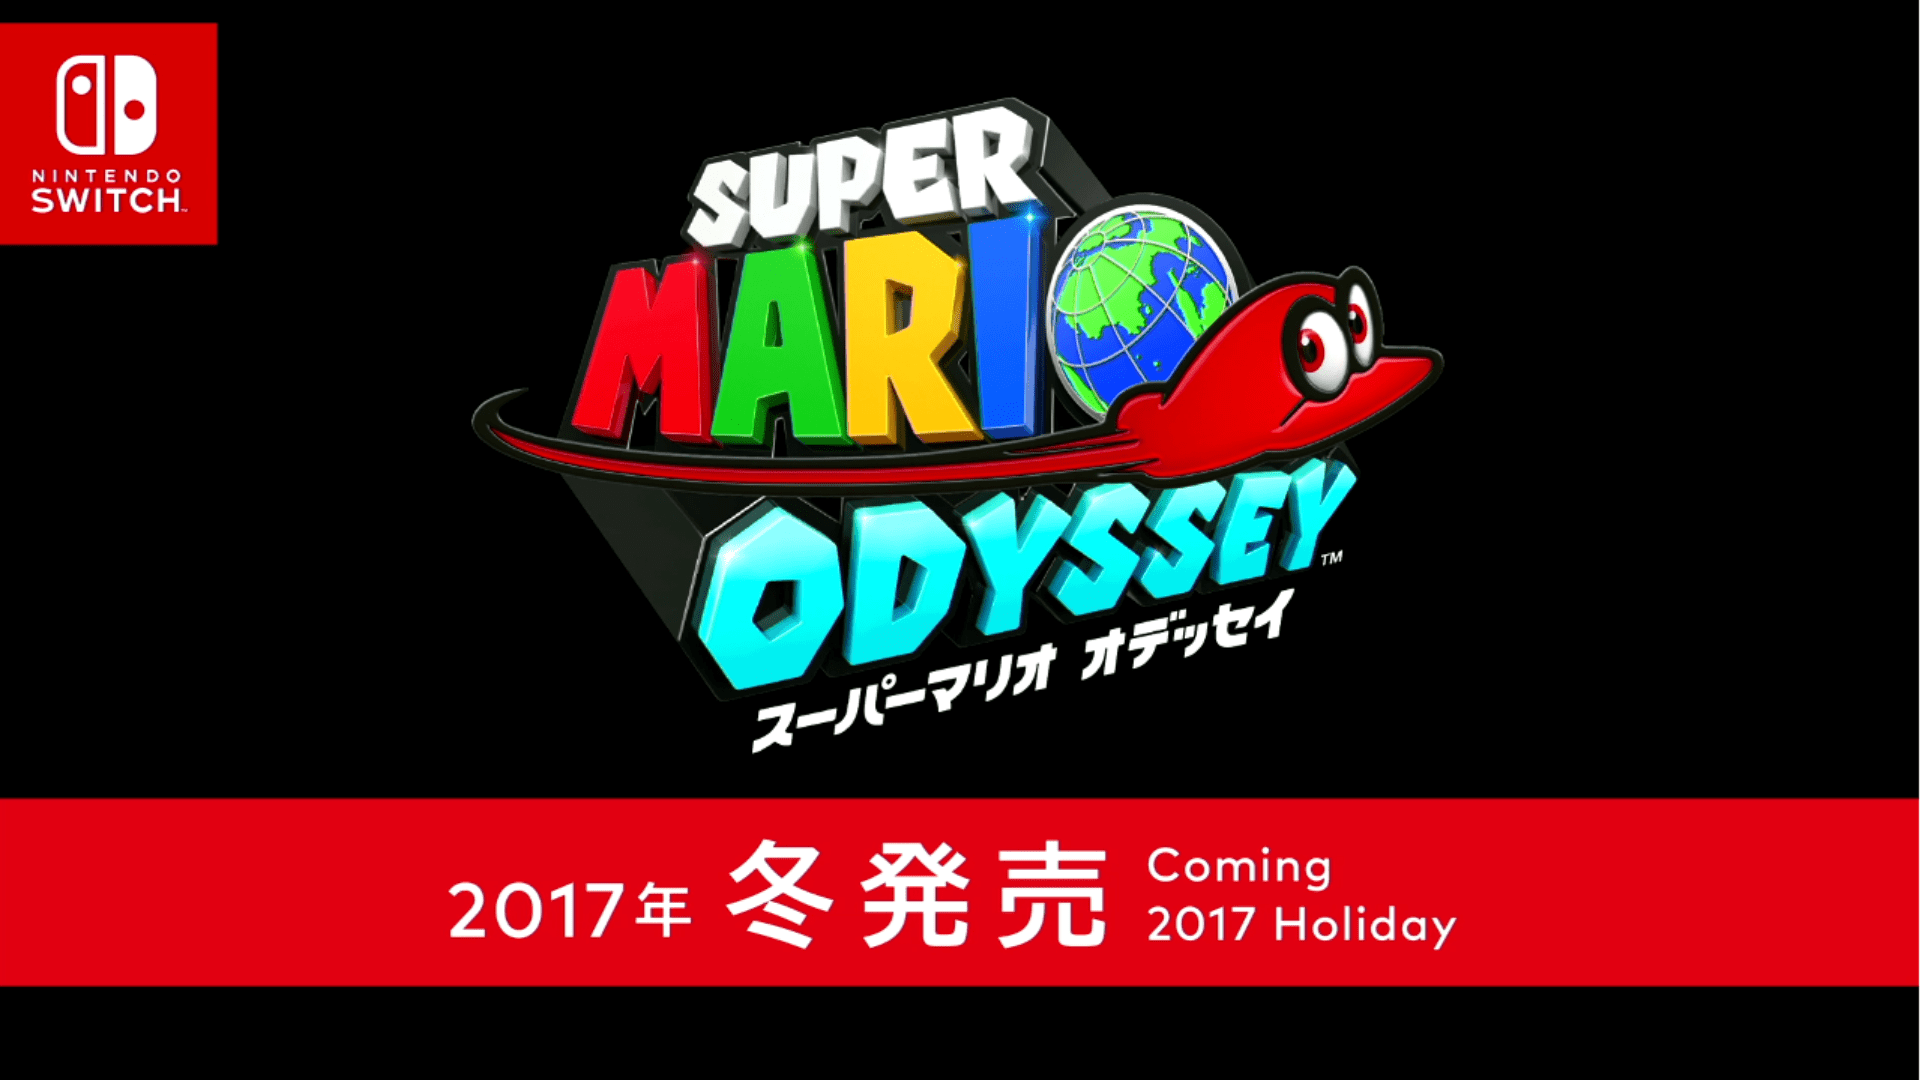 Super Mario Odyssey Coming to Nintendo Switch